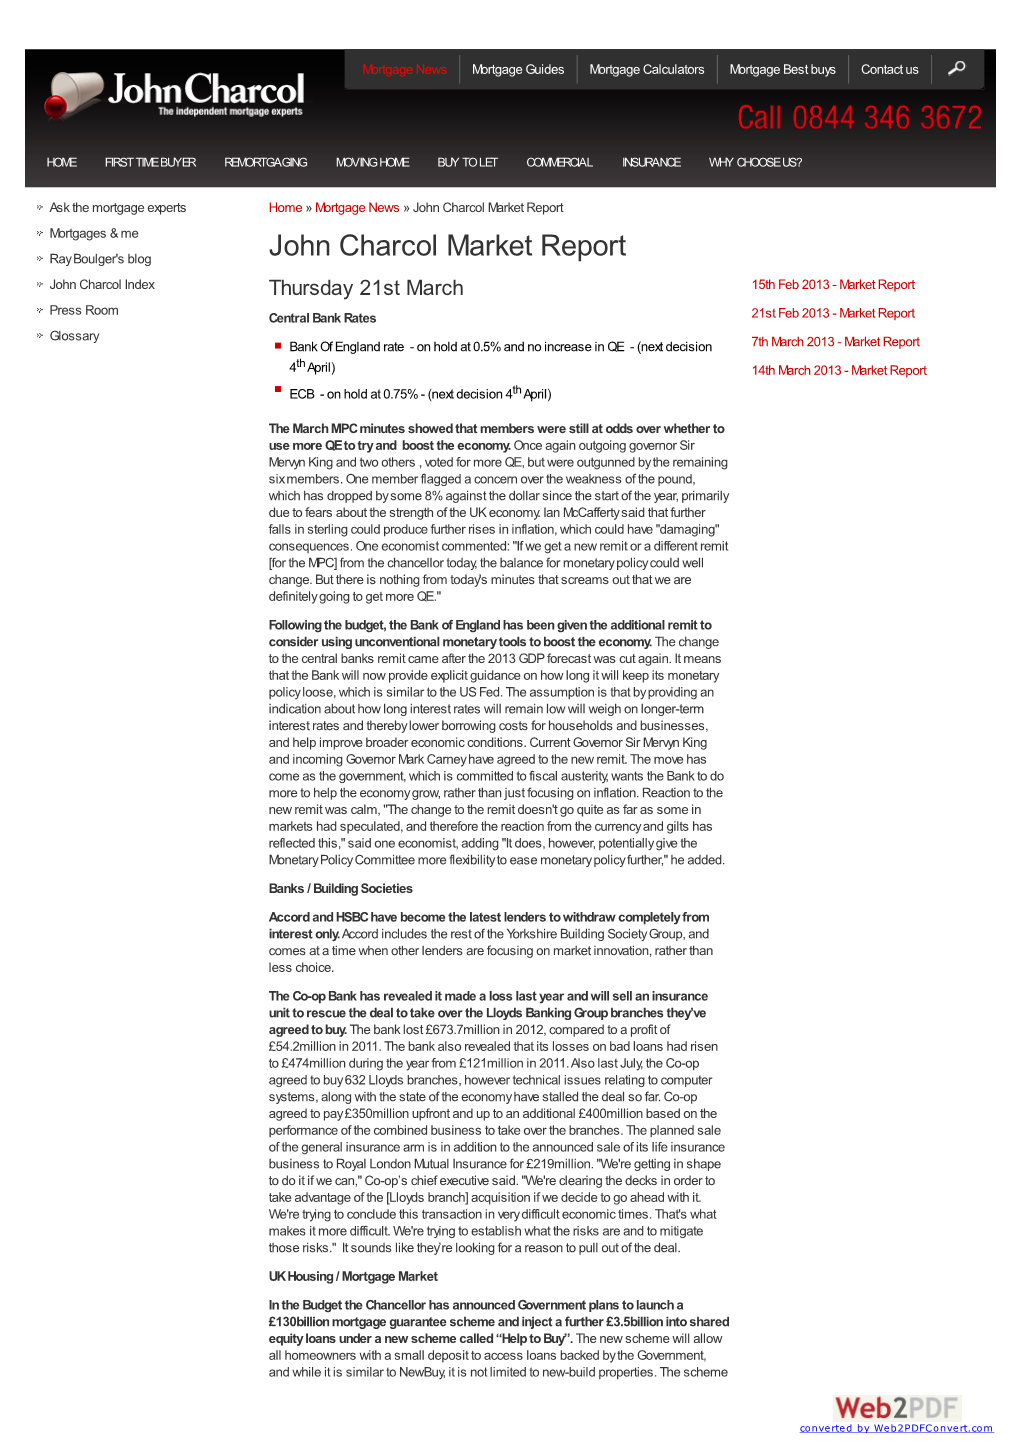 John Charcol Market Report